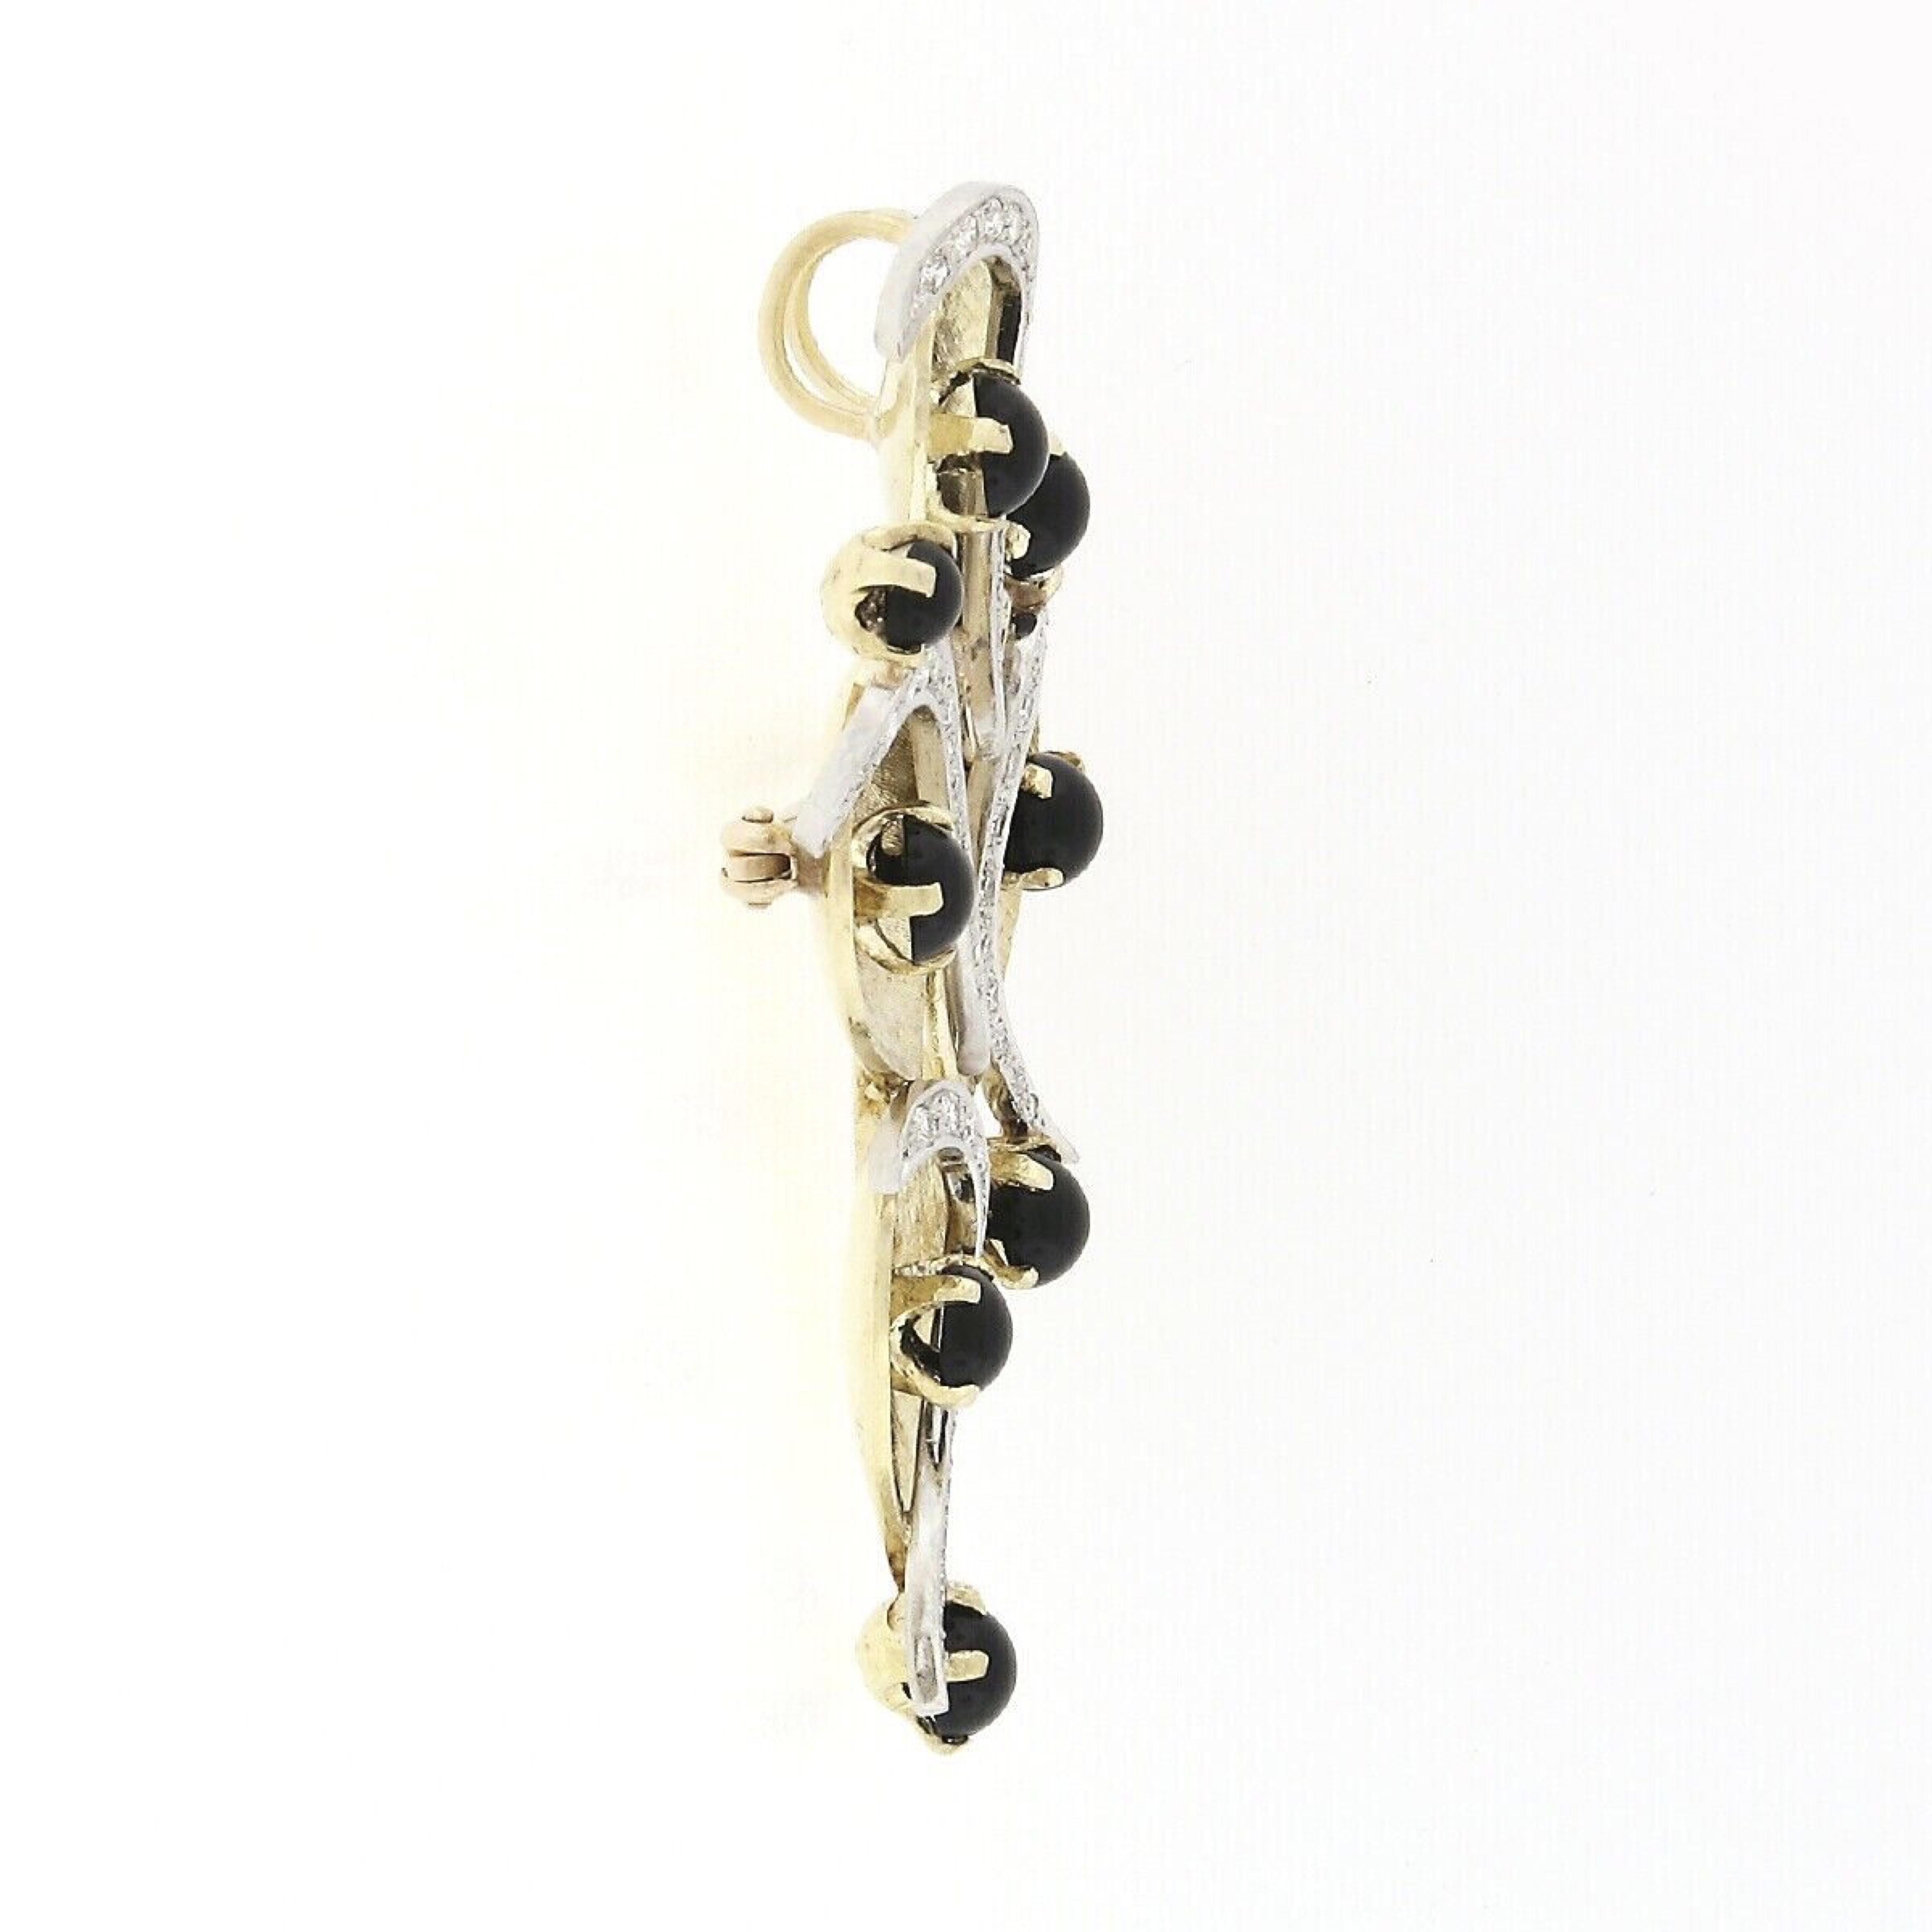 Vintage 18k TT Gold Black Onyx & Diamond Florentine Teardrop Brooch Pin Pendant In Good Condition For Sale In Montclair, NJ